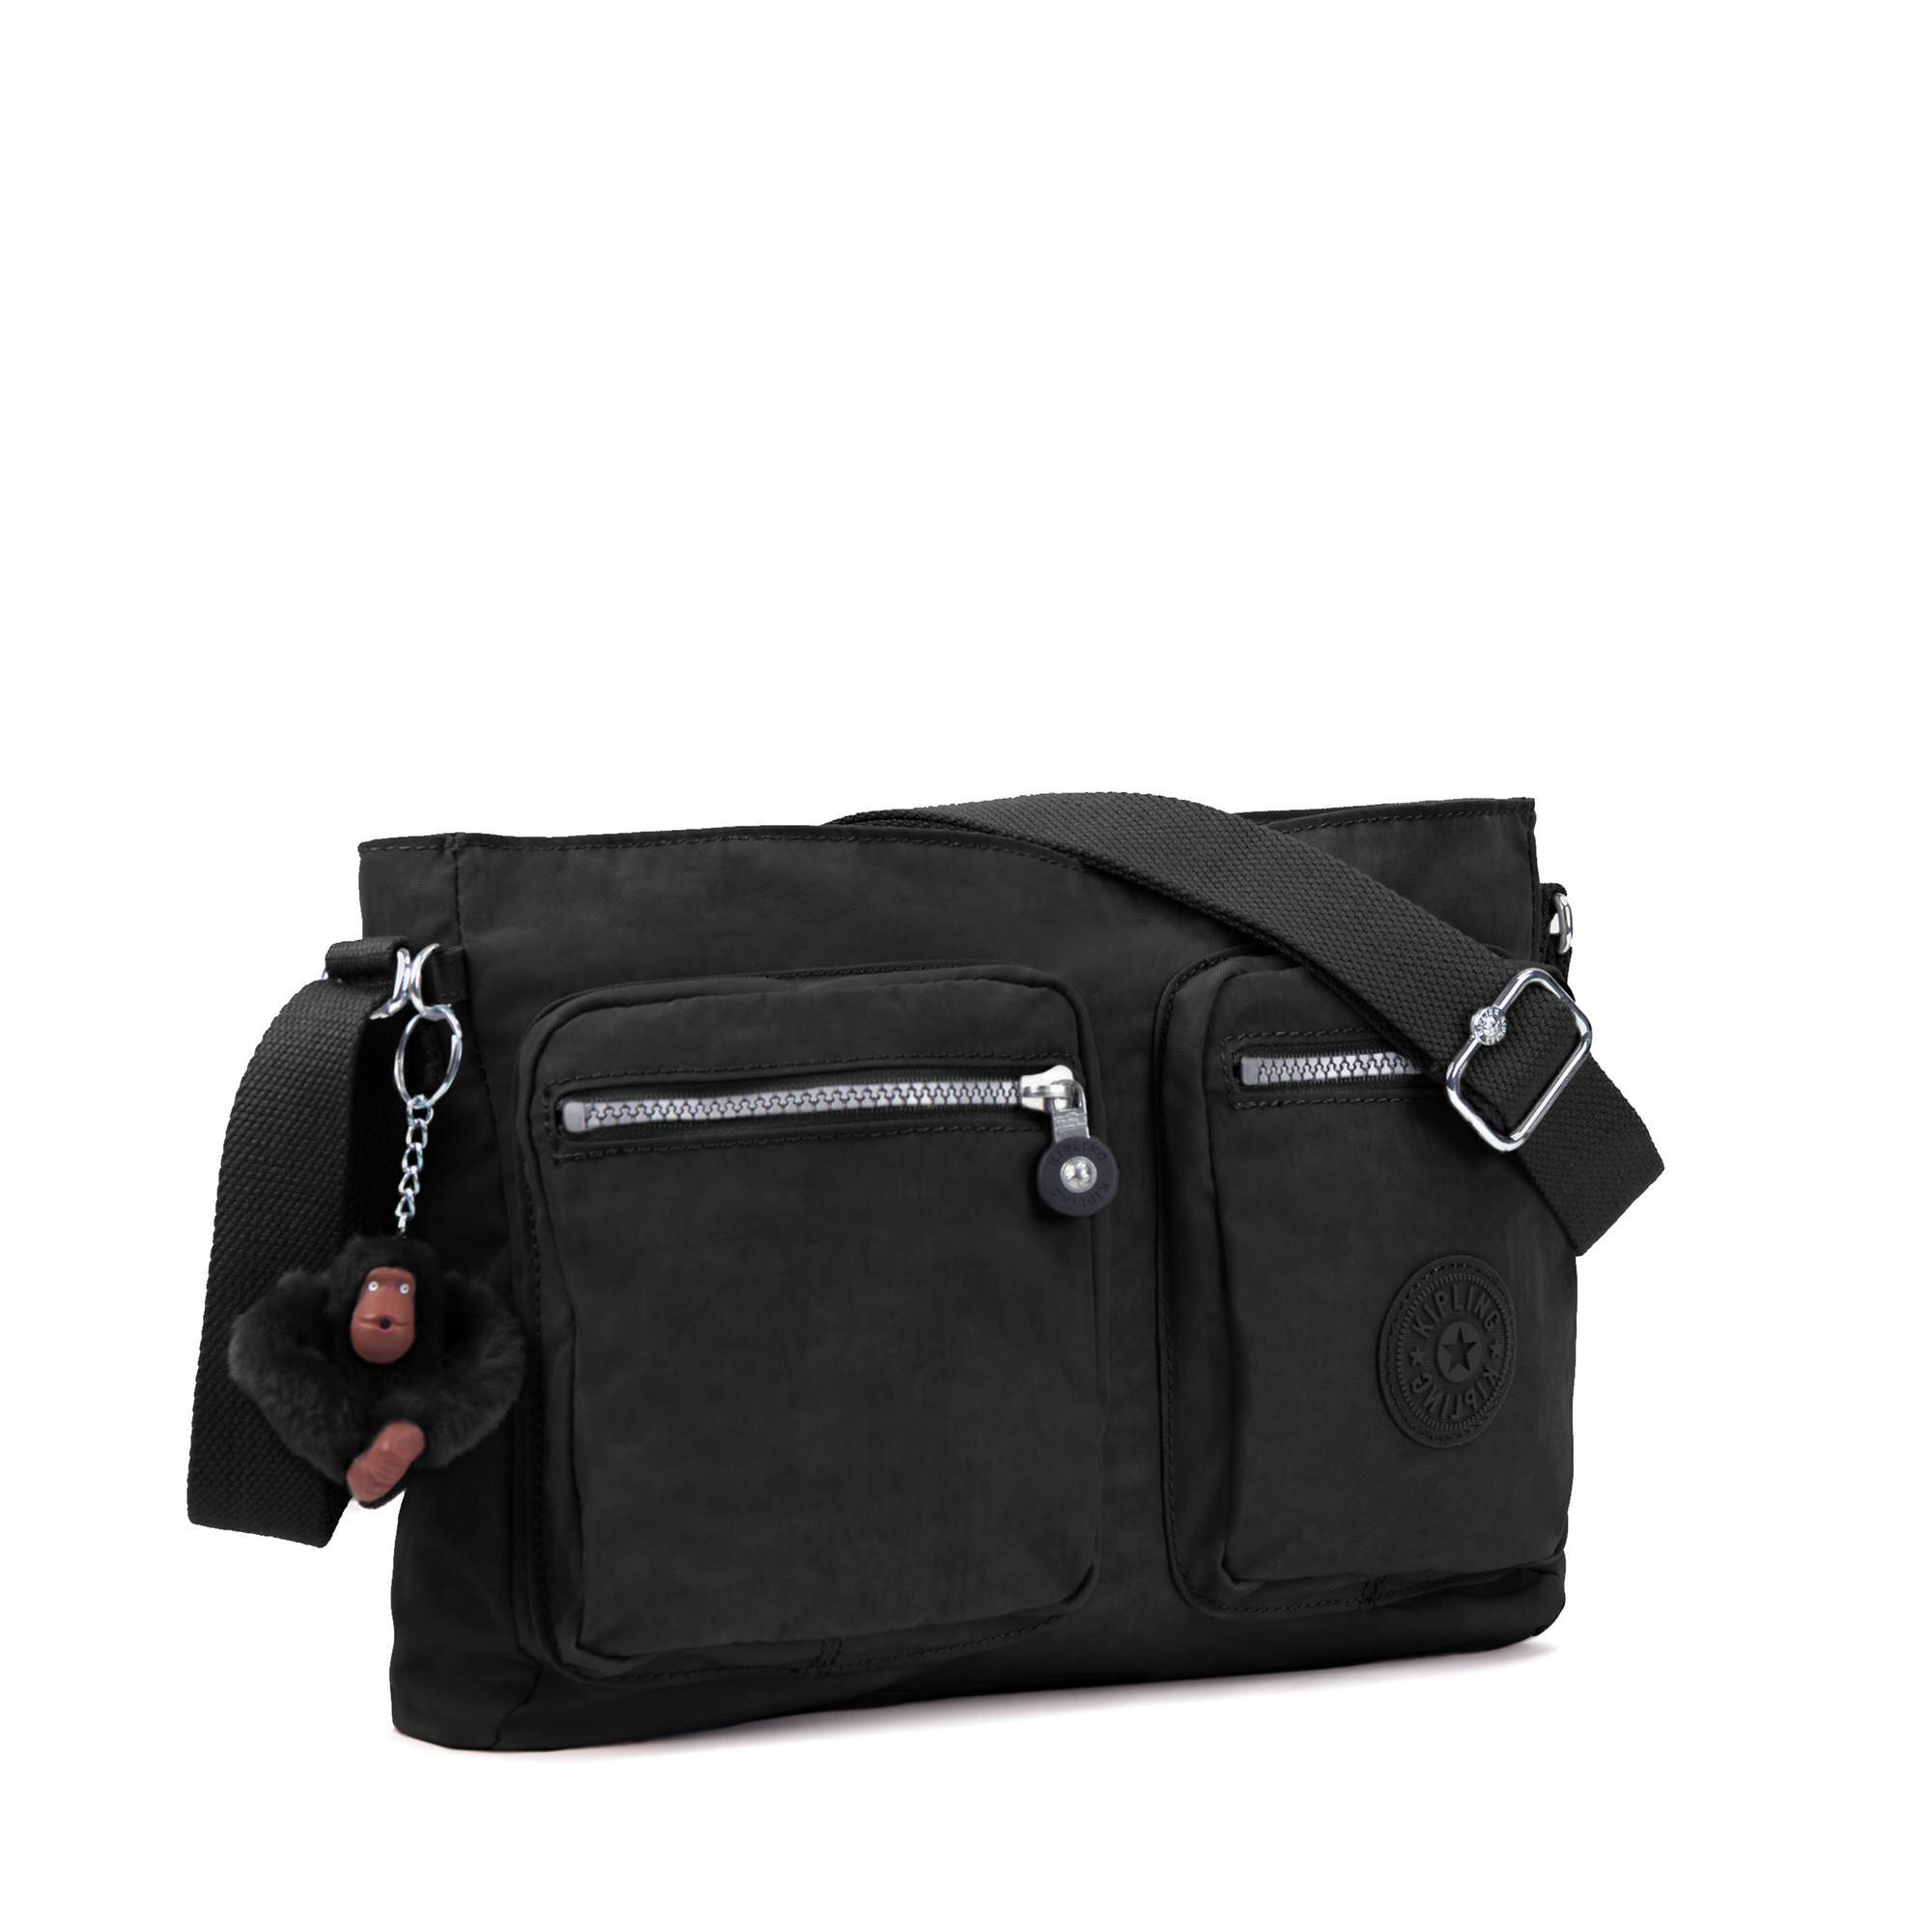 Kipling Coralie Crossbody Bag | eBay